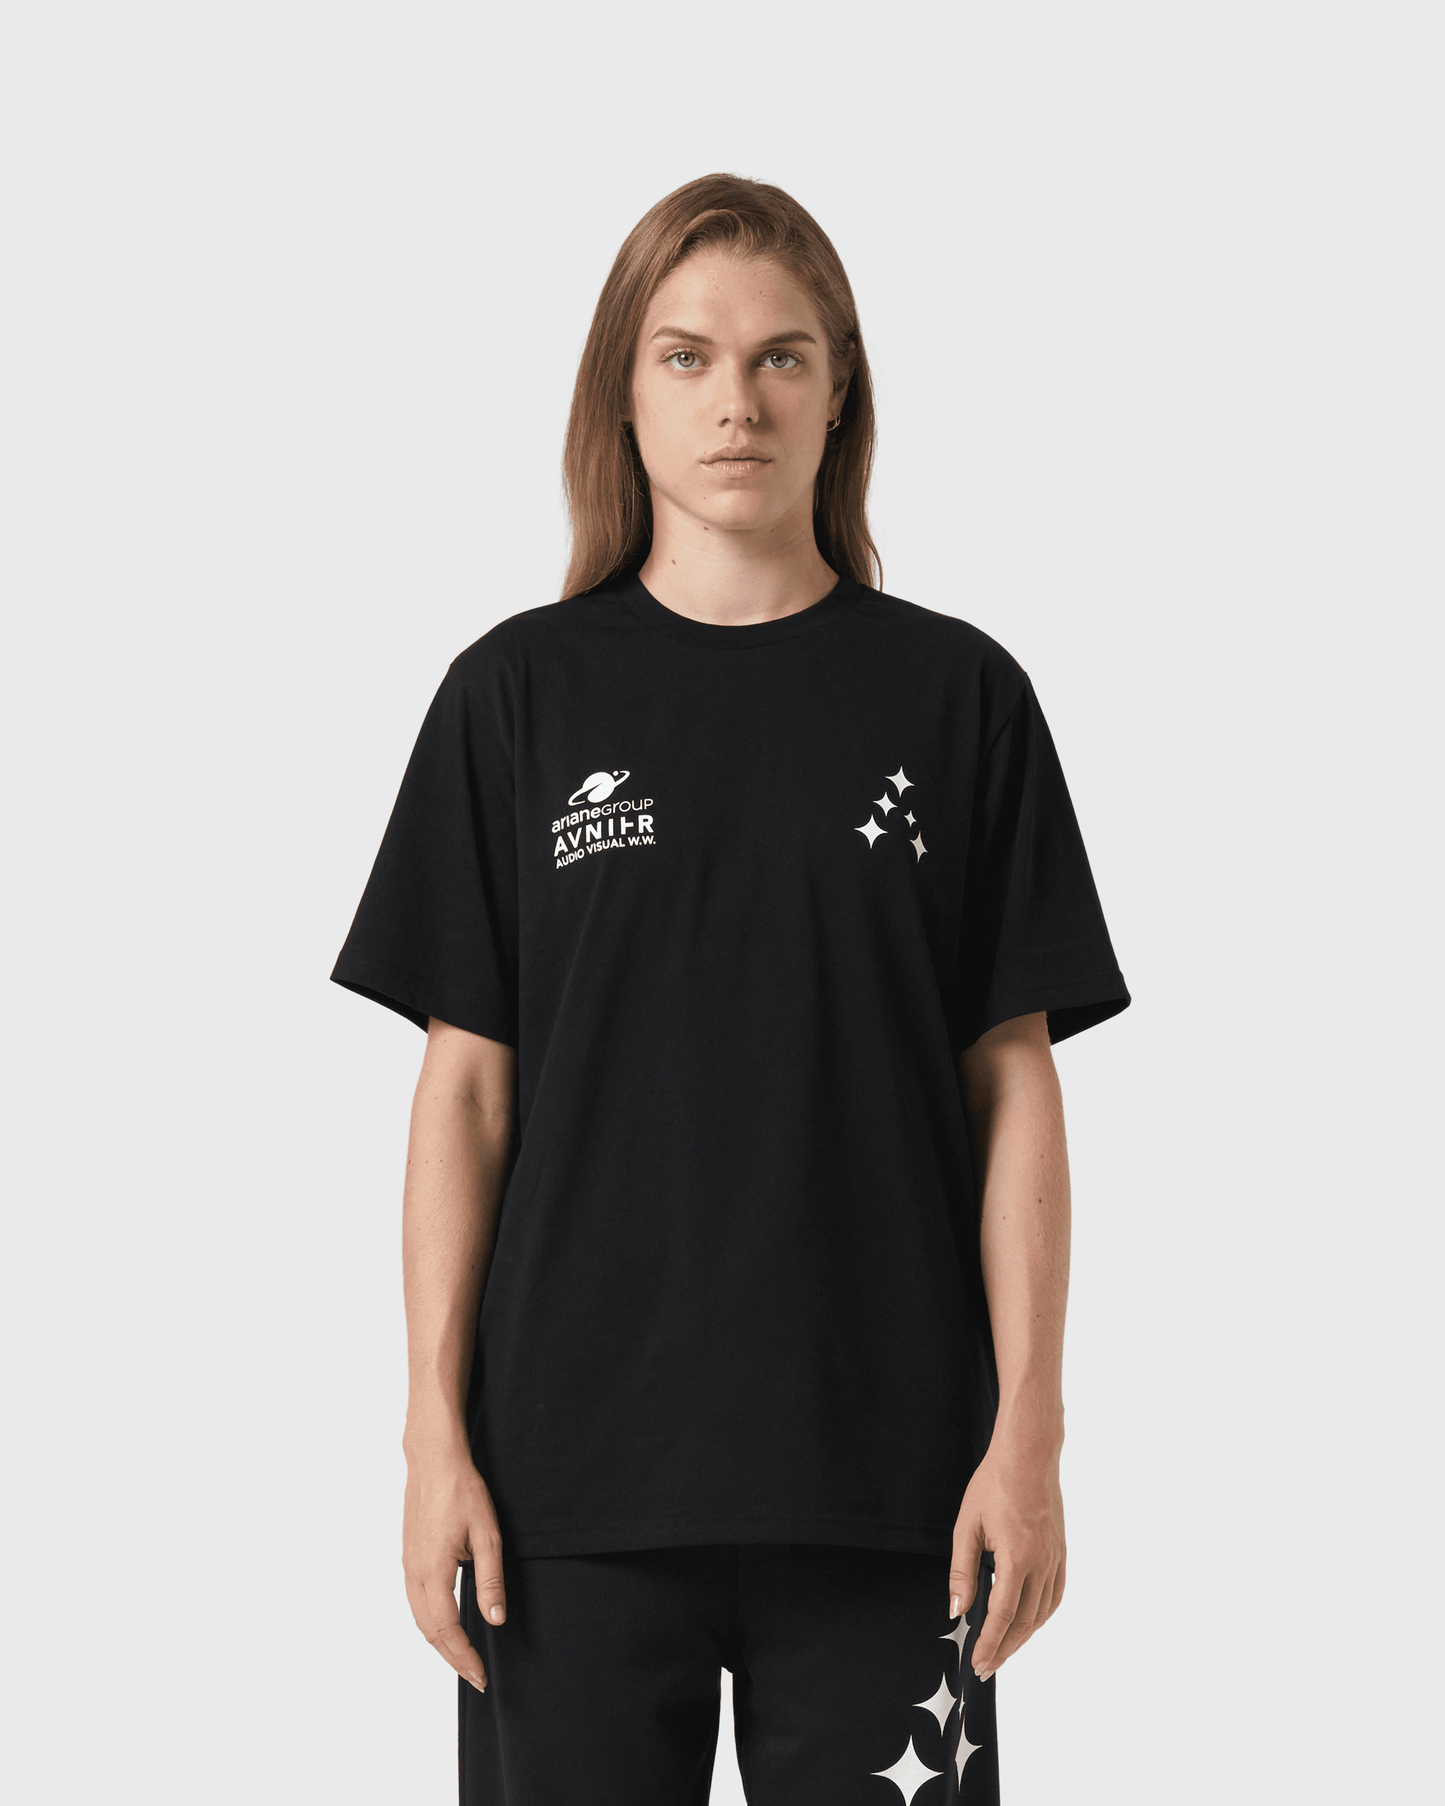 T-shirt SOURCE ROSETTA - ARIANEGROUP x AVNIER